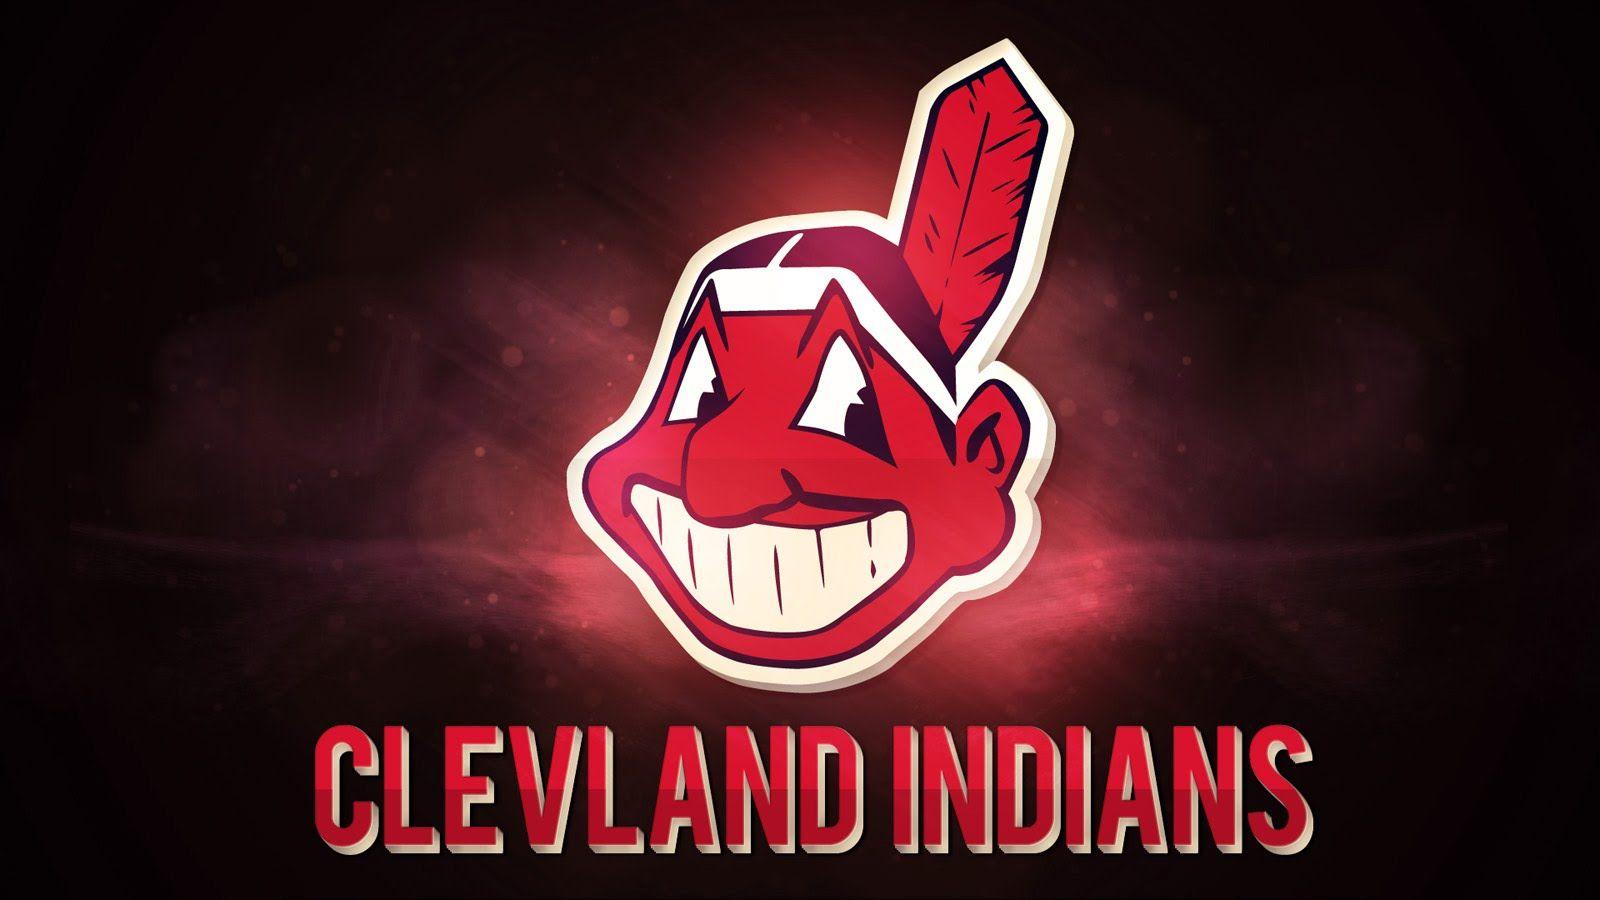 Cleveland Indians wallpaper, Sports, HQ Cleveland Indians